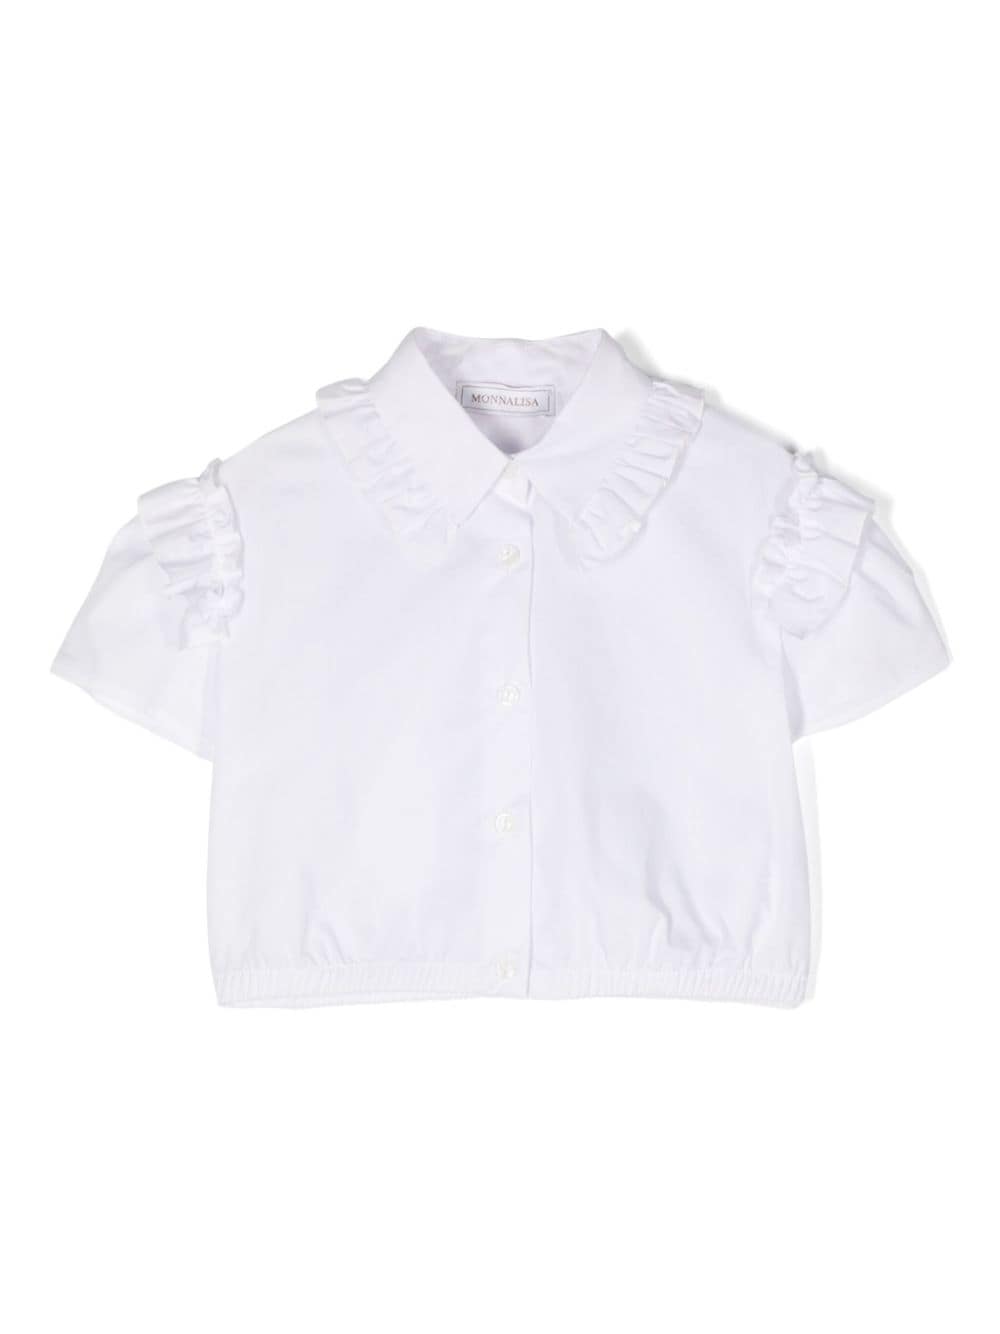 Monnalisa cotton poplin shirt - White von Monnalisa